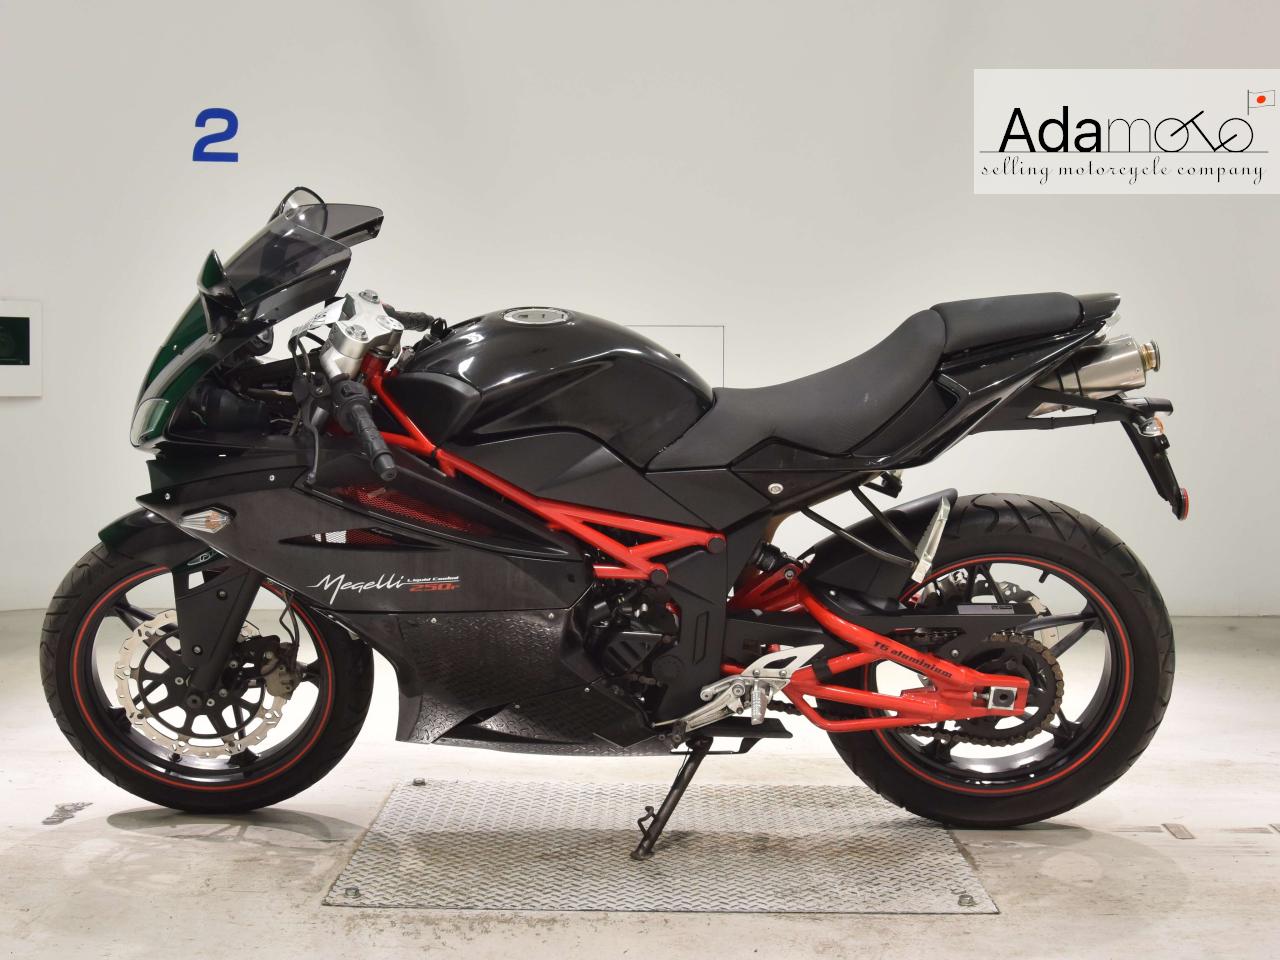 Vespa Megali 250R - Adamoto - Motorcycles from Japan